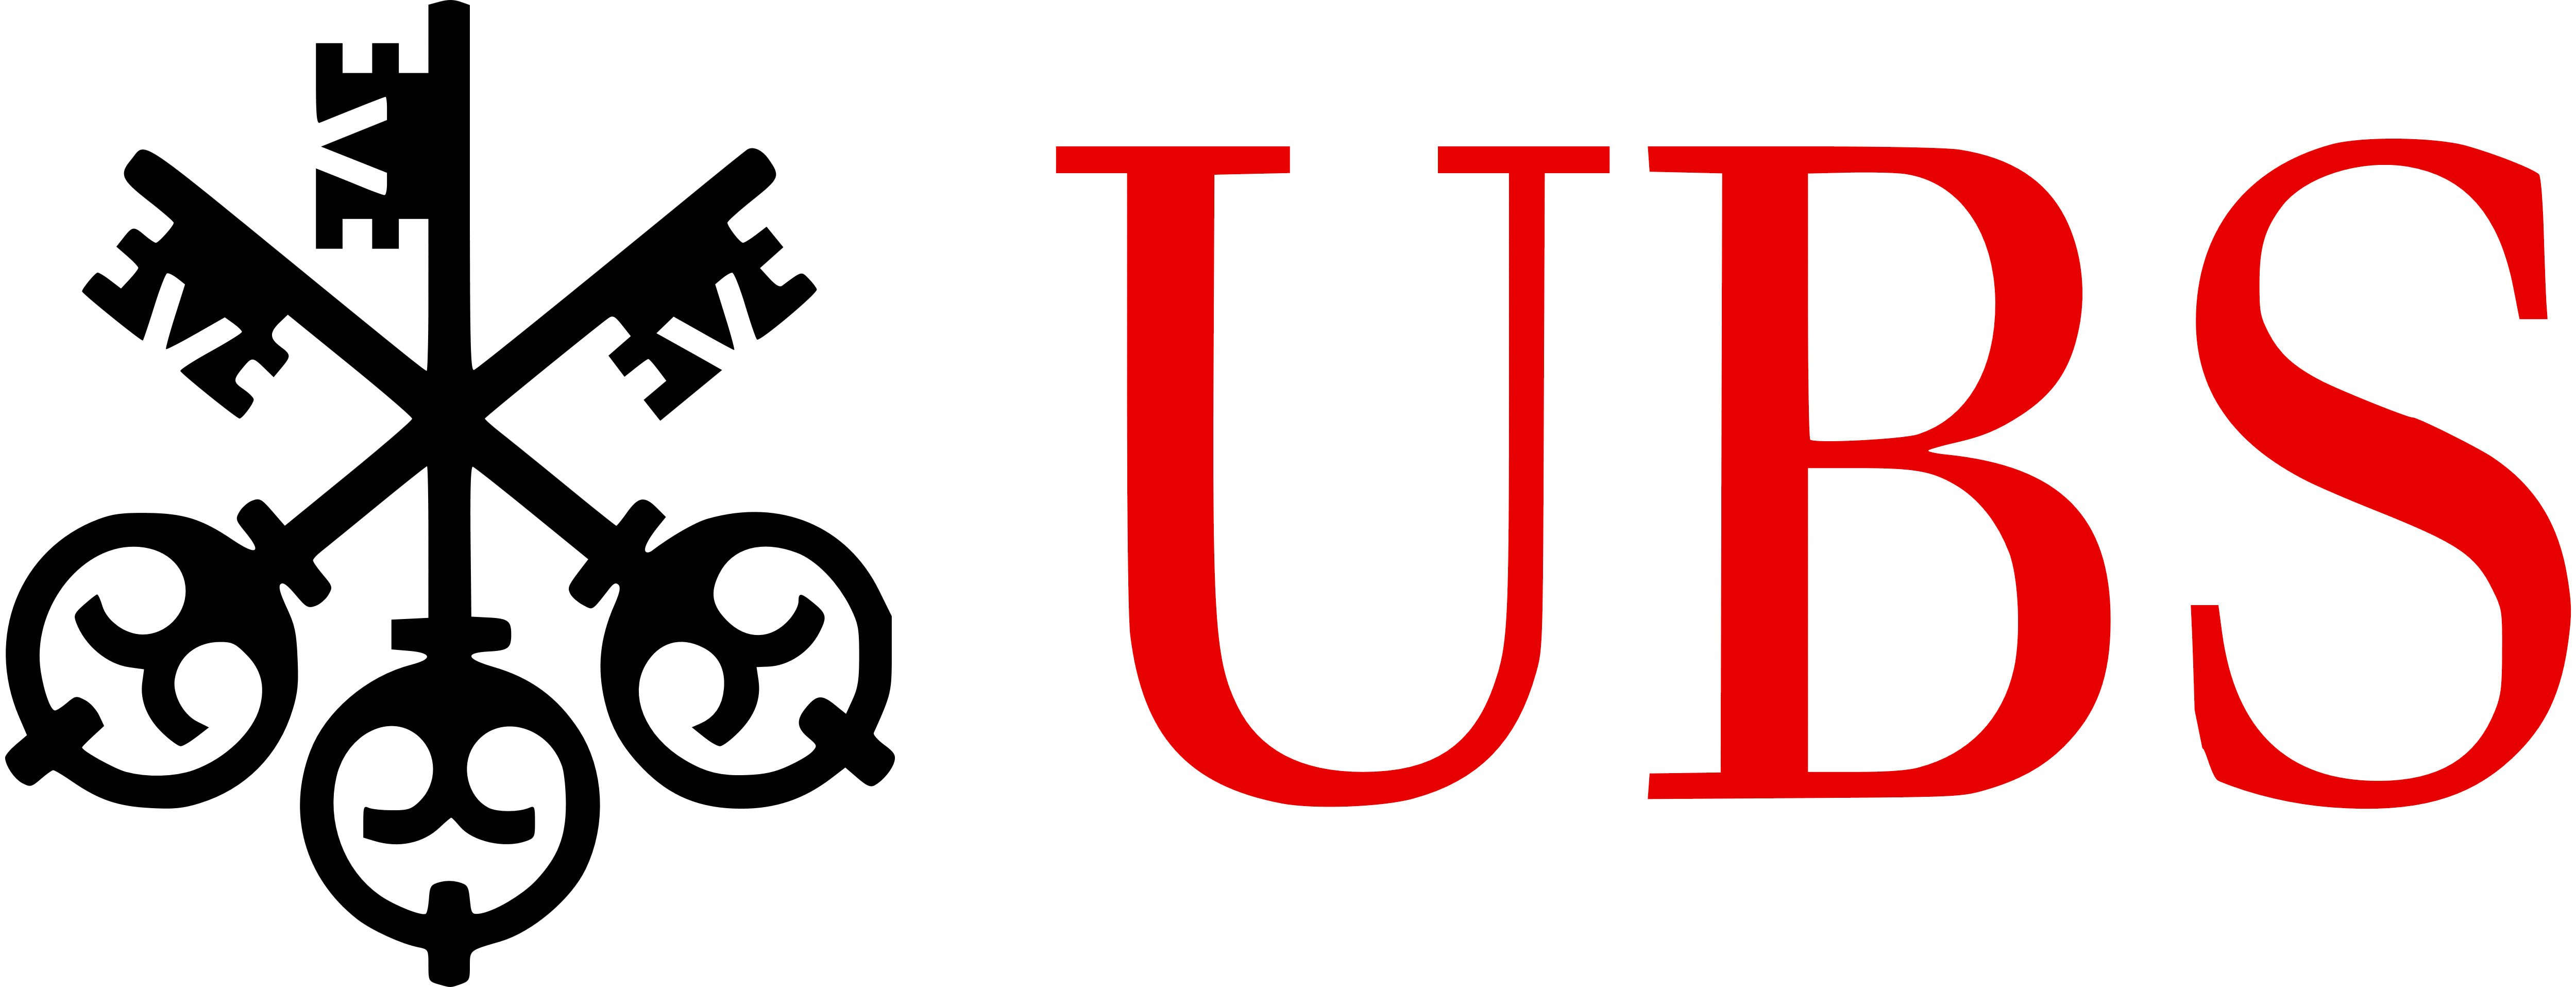 https://warrenenskat.com/wp-content/uploads/2019/01/Logo-UBS.png